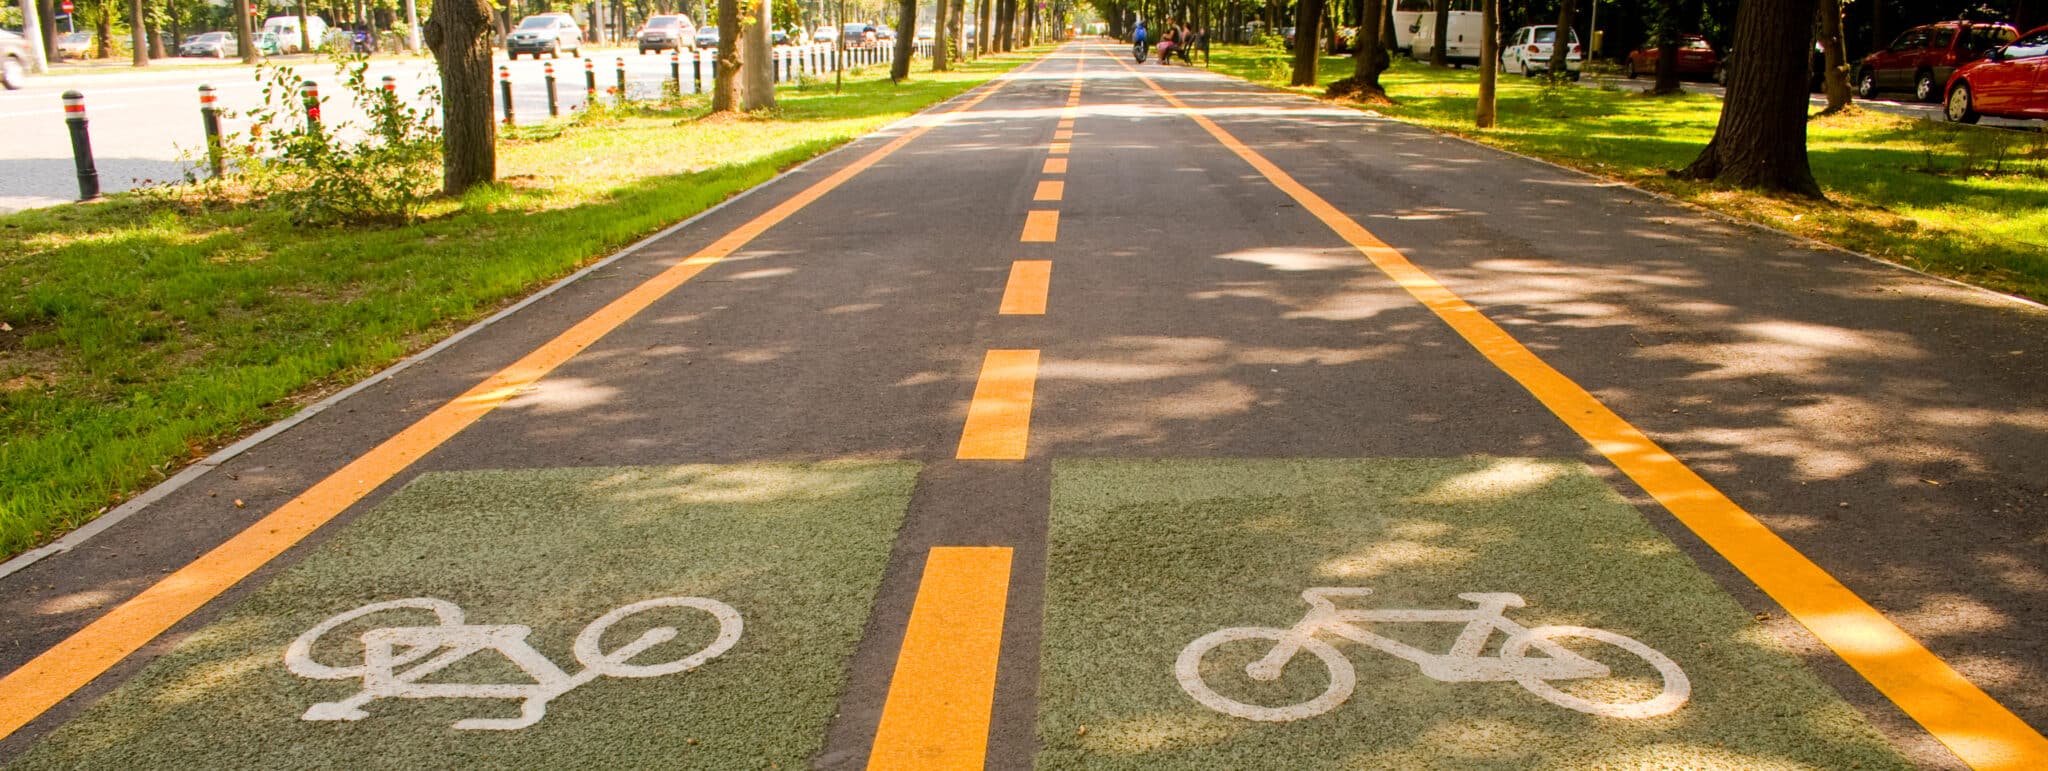 Biking path with bright yellow markings.